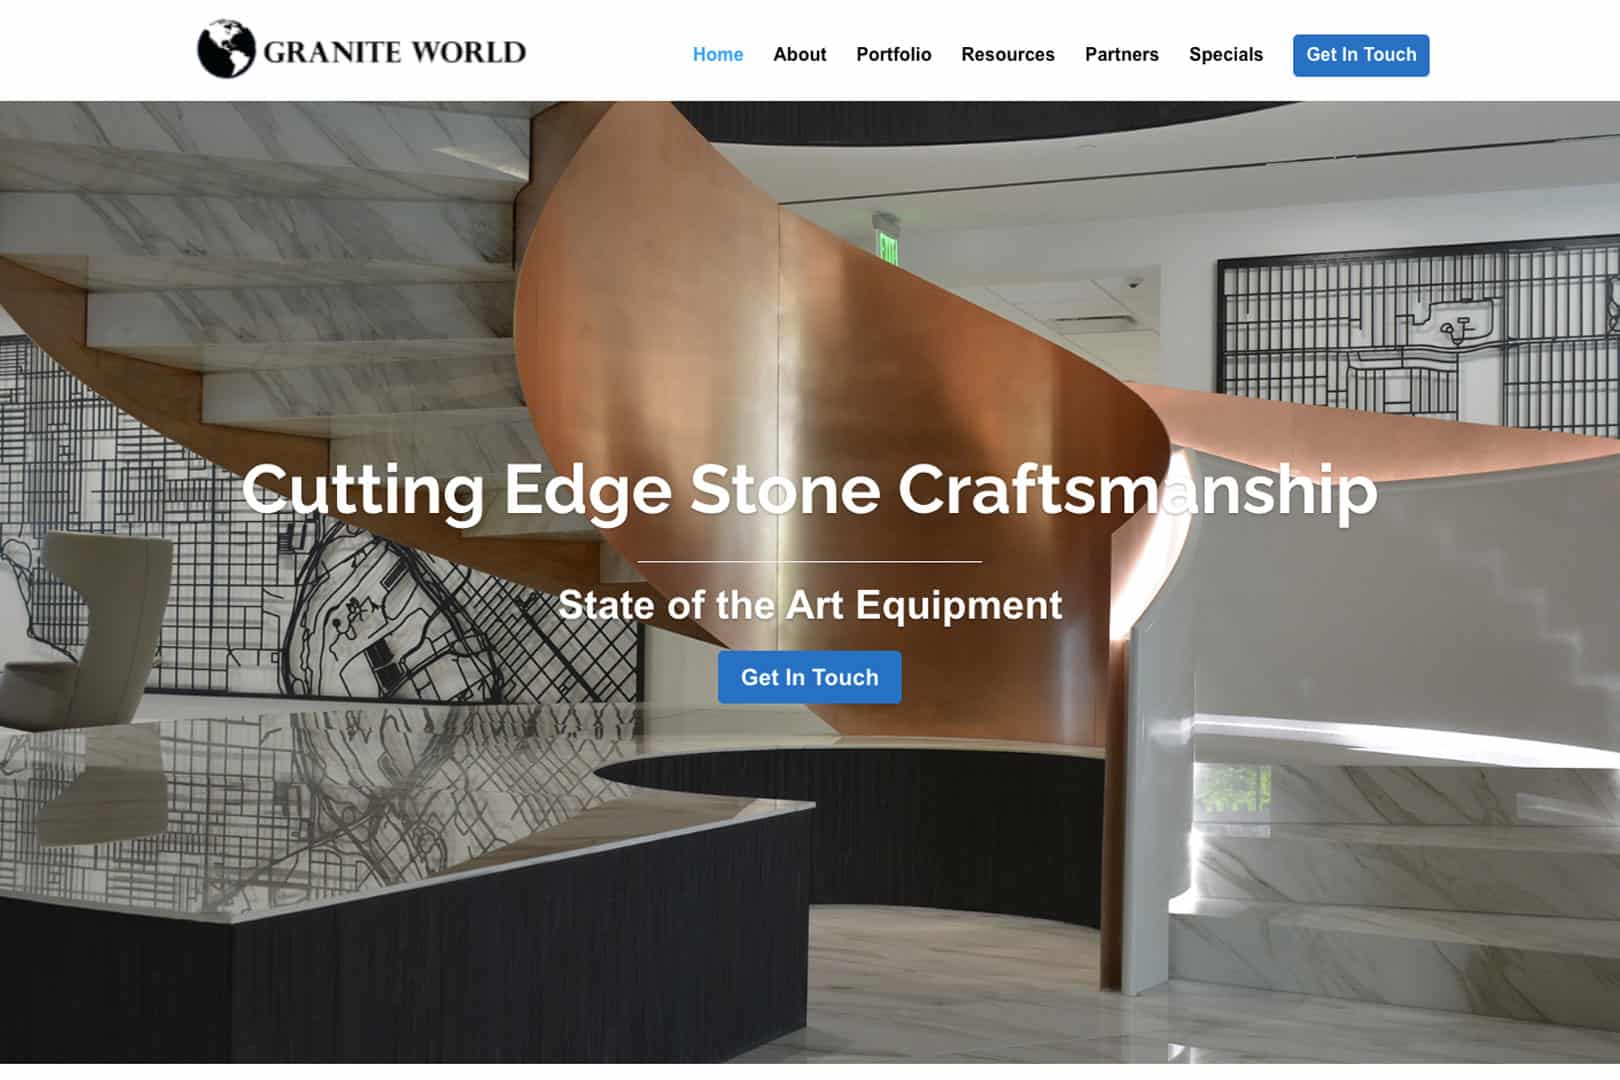 Granite World home page